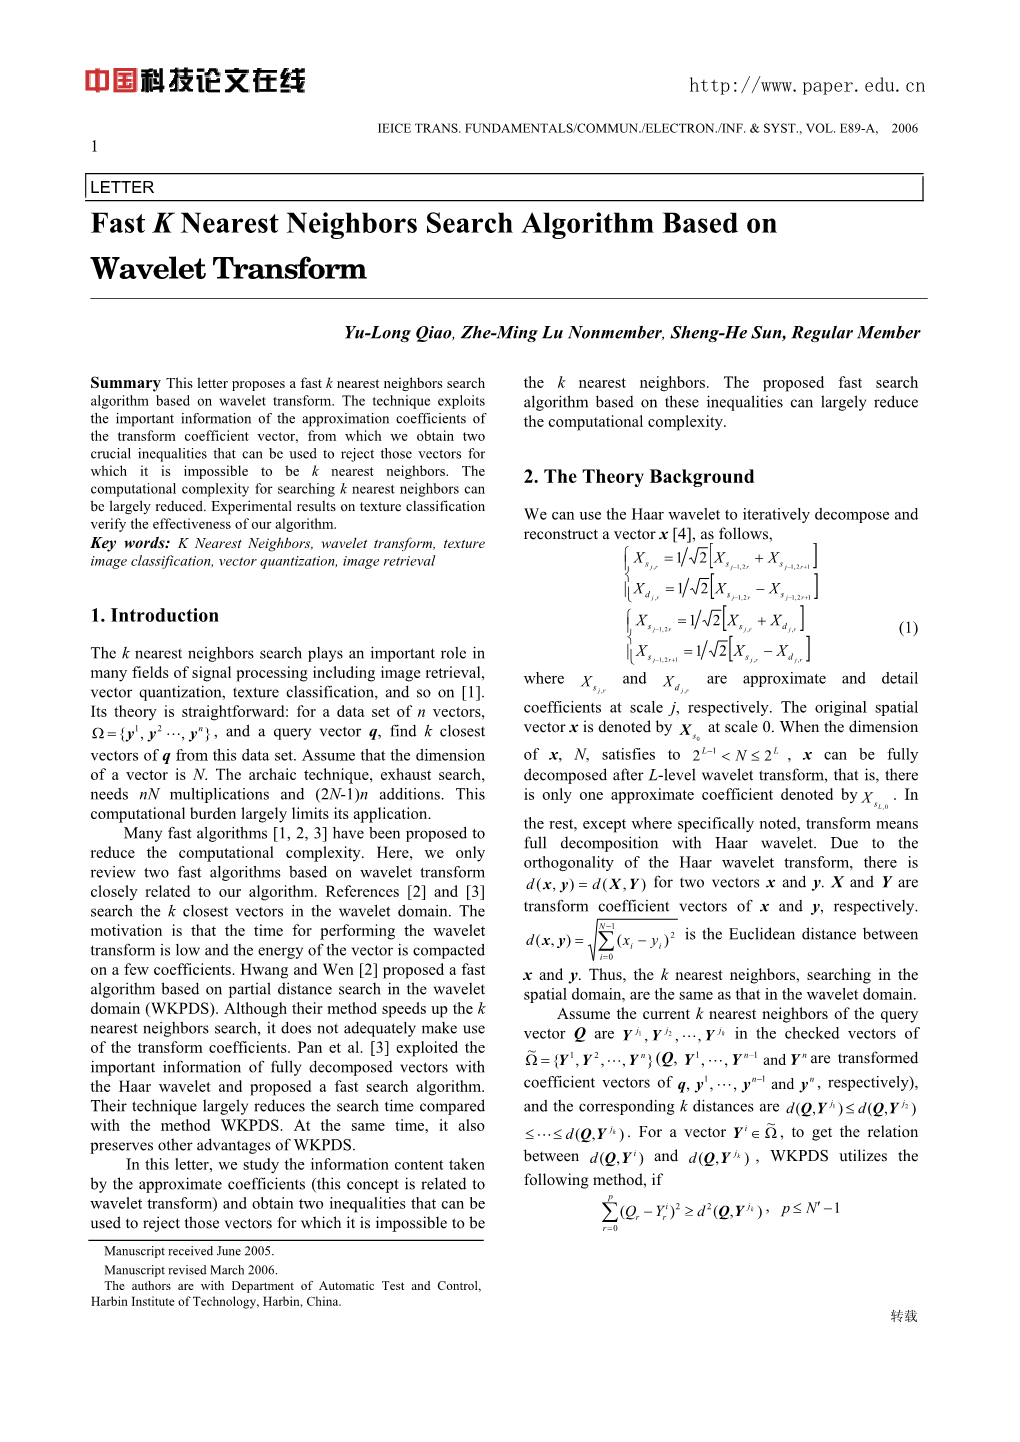 Fast K Nearest Neighbors Search Algorithm Based on Wavelet Transform